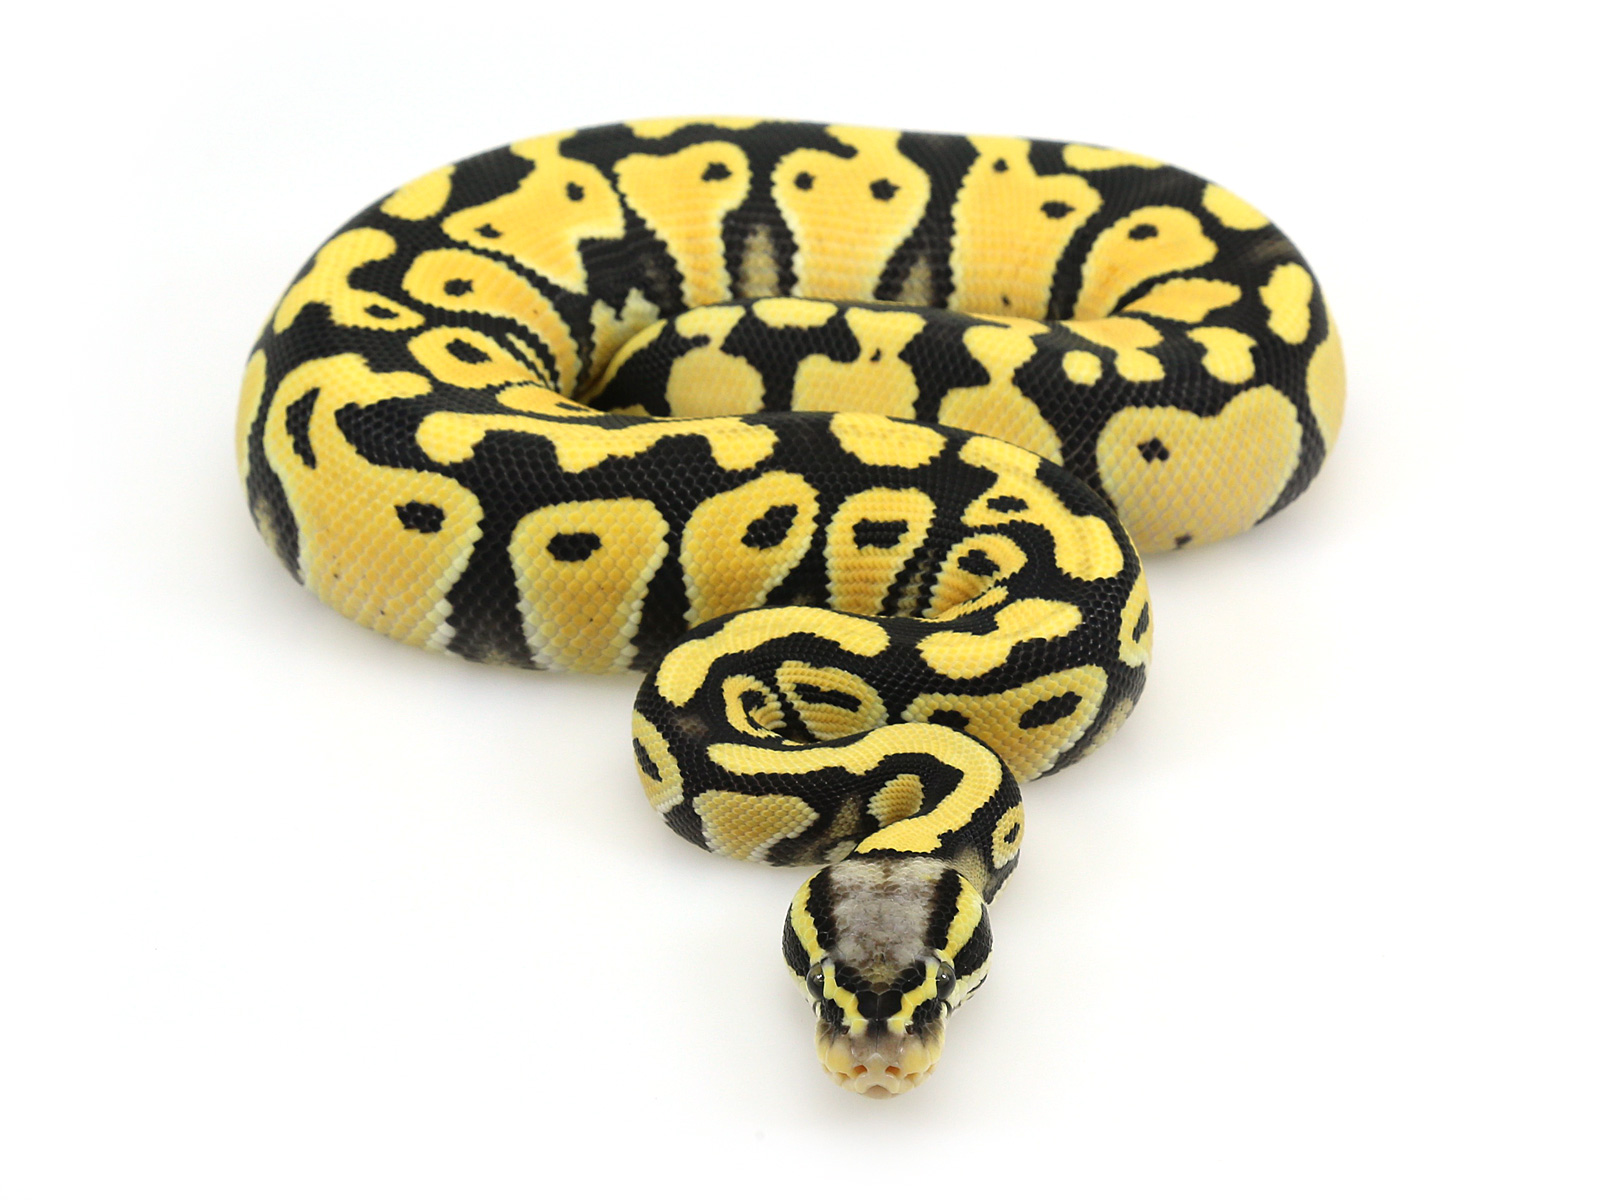 Ghost Ball Python - Northwest Reptiles - Orange Ghost Ball Python Descrip.....